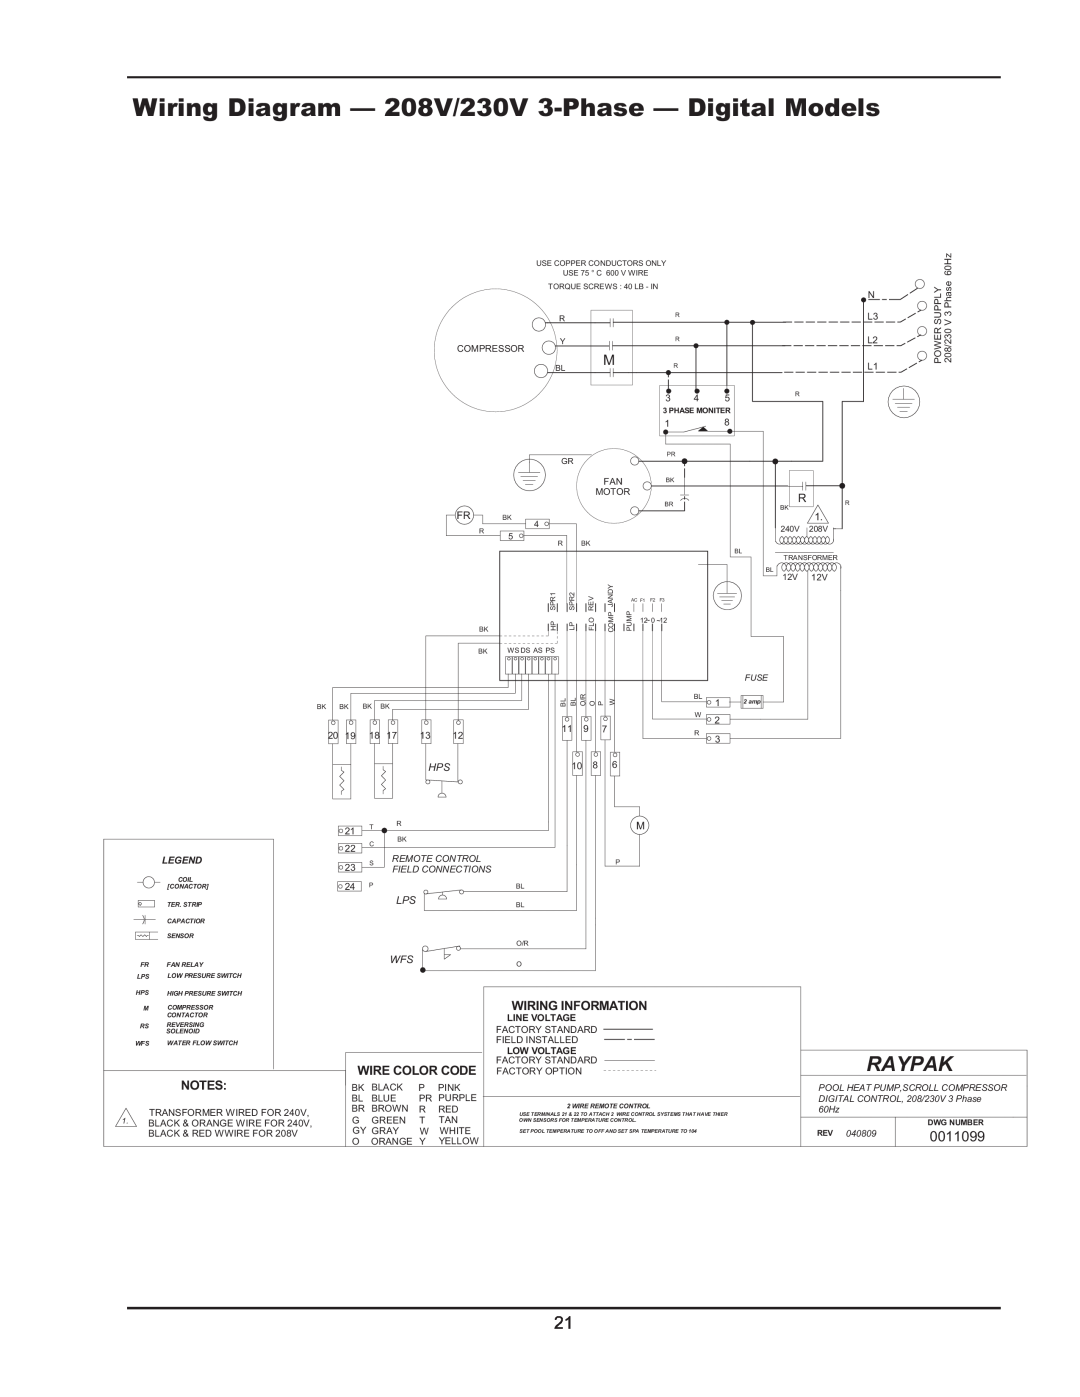 Energy Tech Laboratories 8320 Raypak, 0011099, Wiring Information, Wire Color Code, Fuse, Remote Control, Line Voltage 